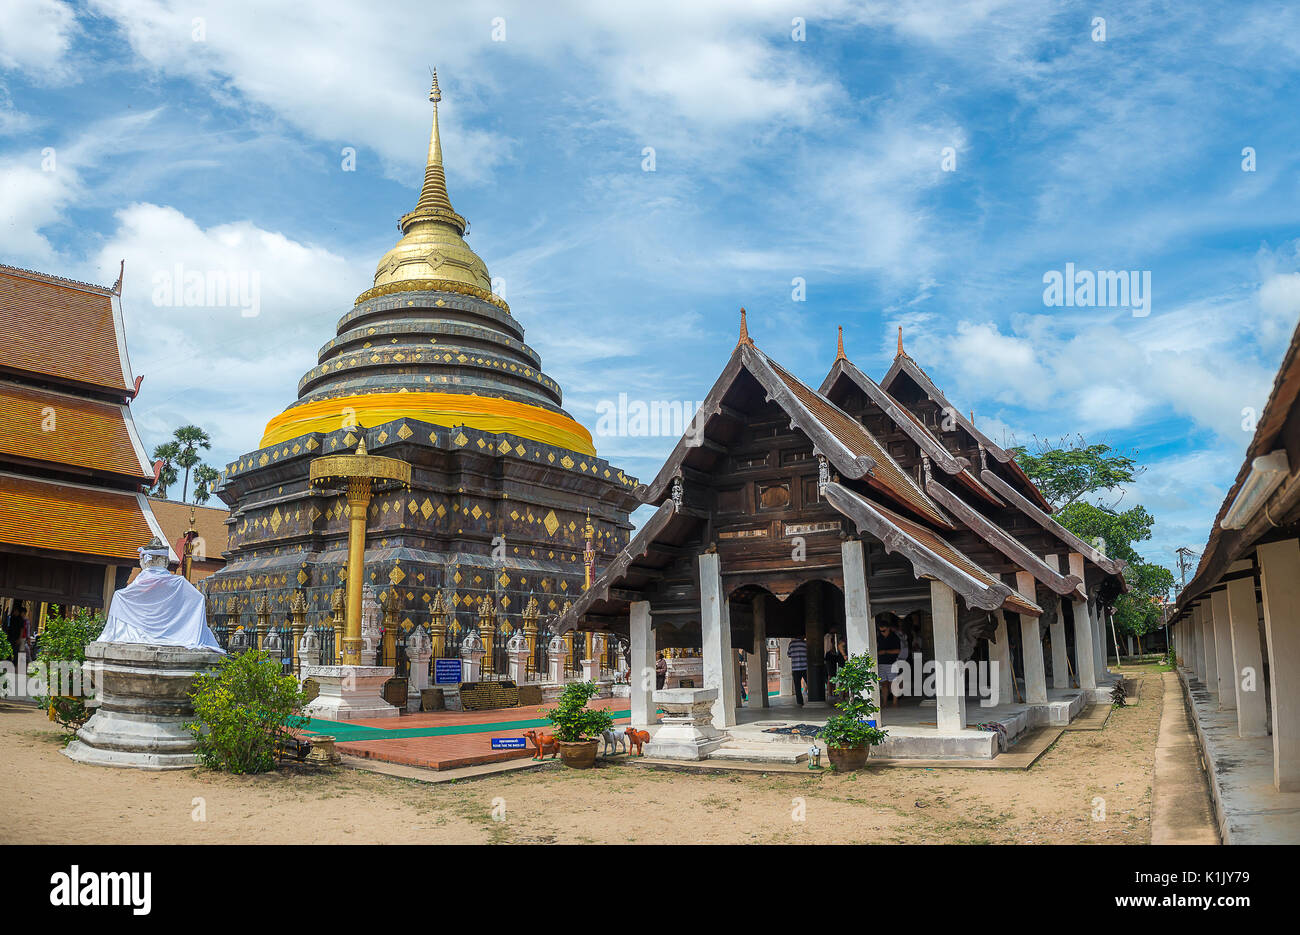 Bellissimo tempio anceint in Thailandia dunring bella giornata Foto Stock